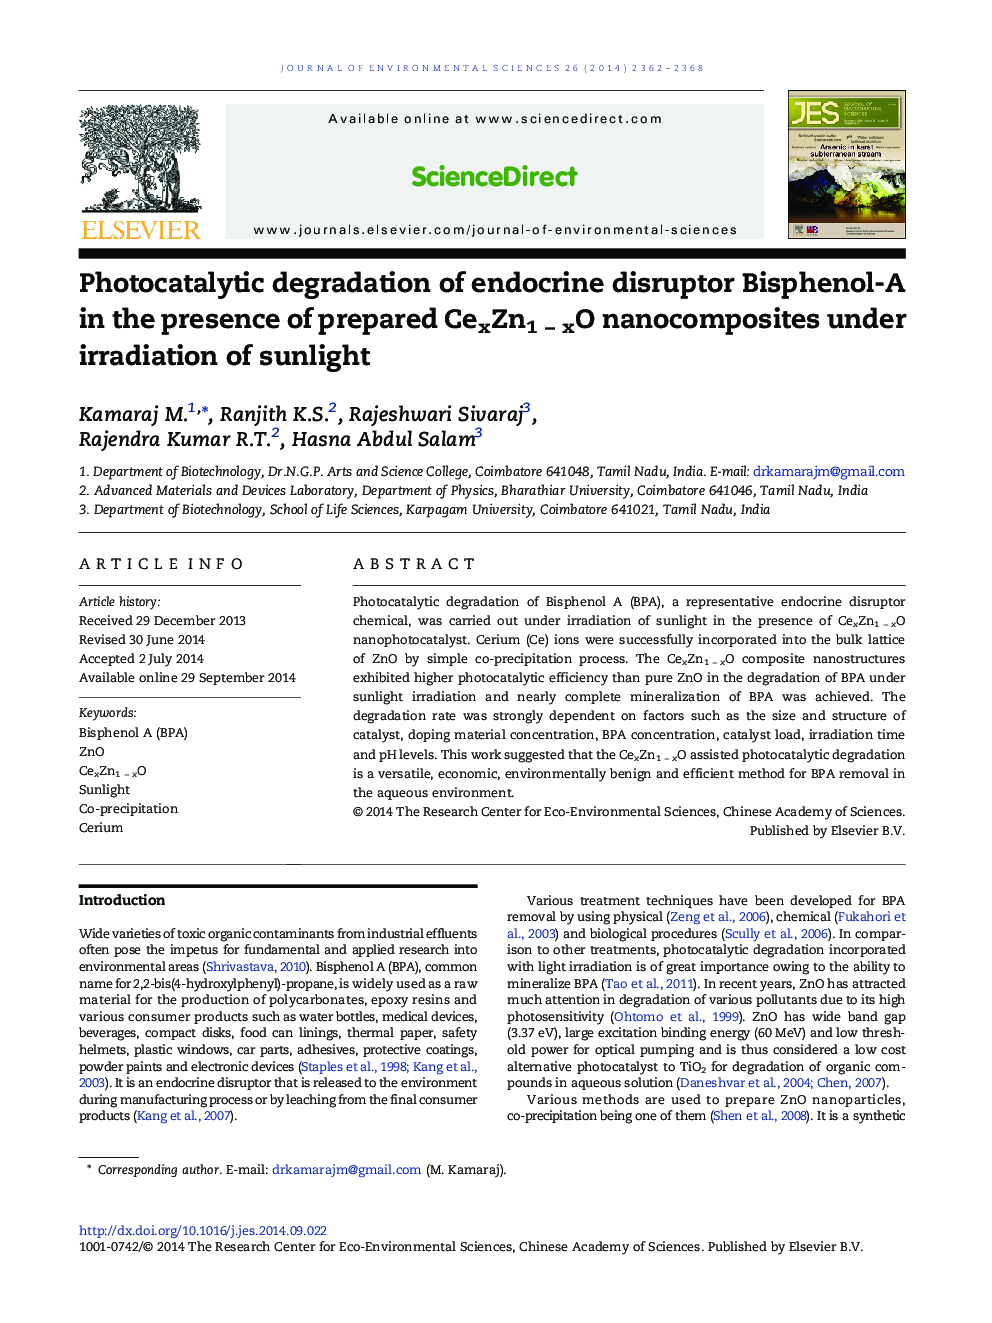 Photocatalytic degradation of endocrine disruptor Bisphenol-A in the presence of prepared CexZn1Â âÂ xO nanocomposites under irradiation of sunlight